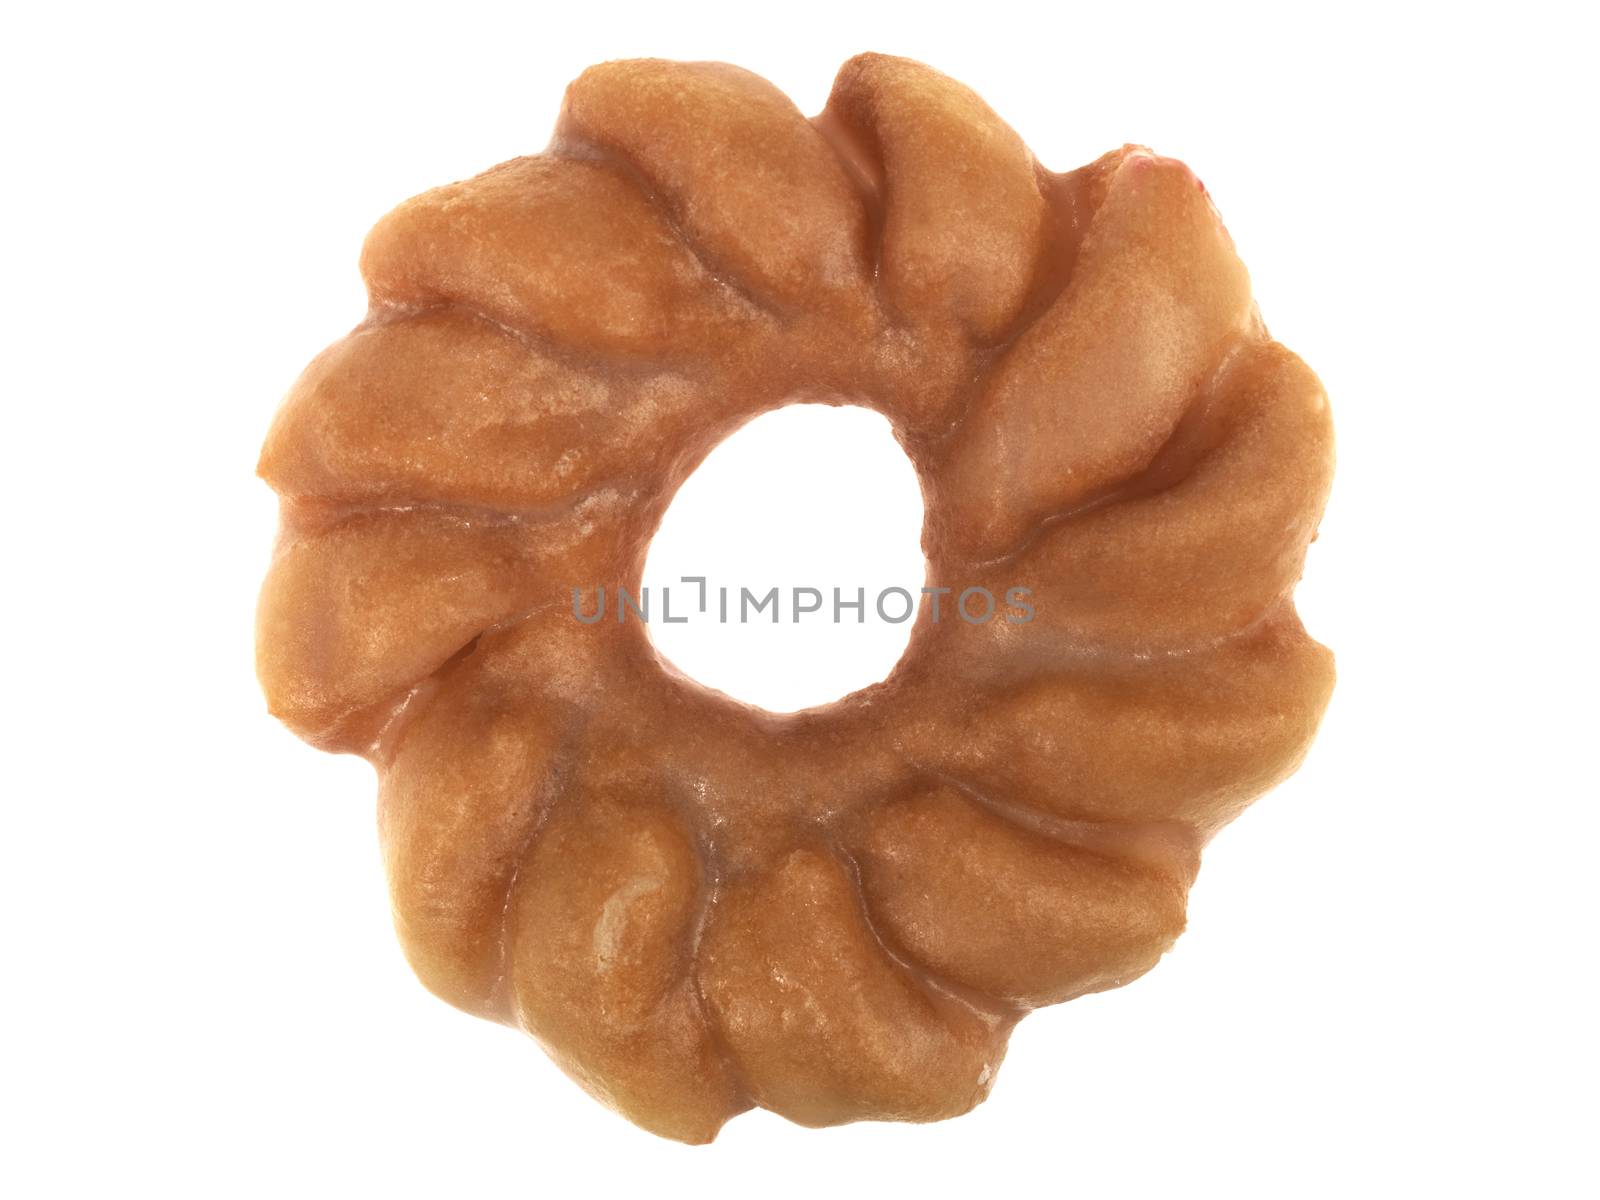 Glazed Cruller Donuts by Whiteboxmedia